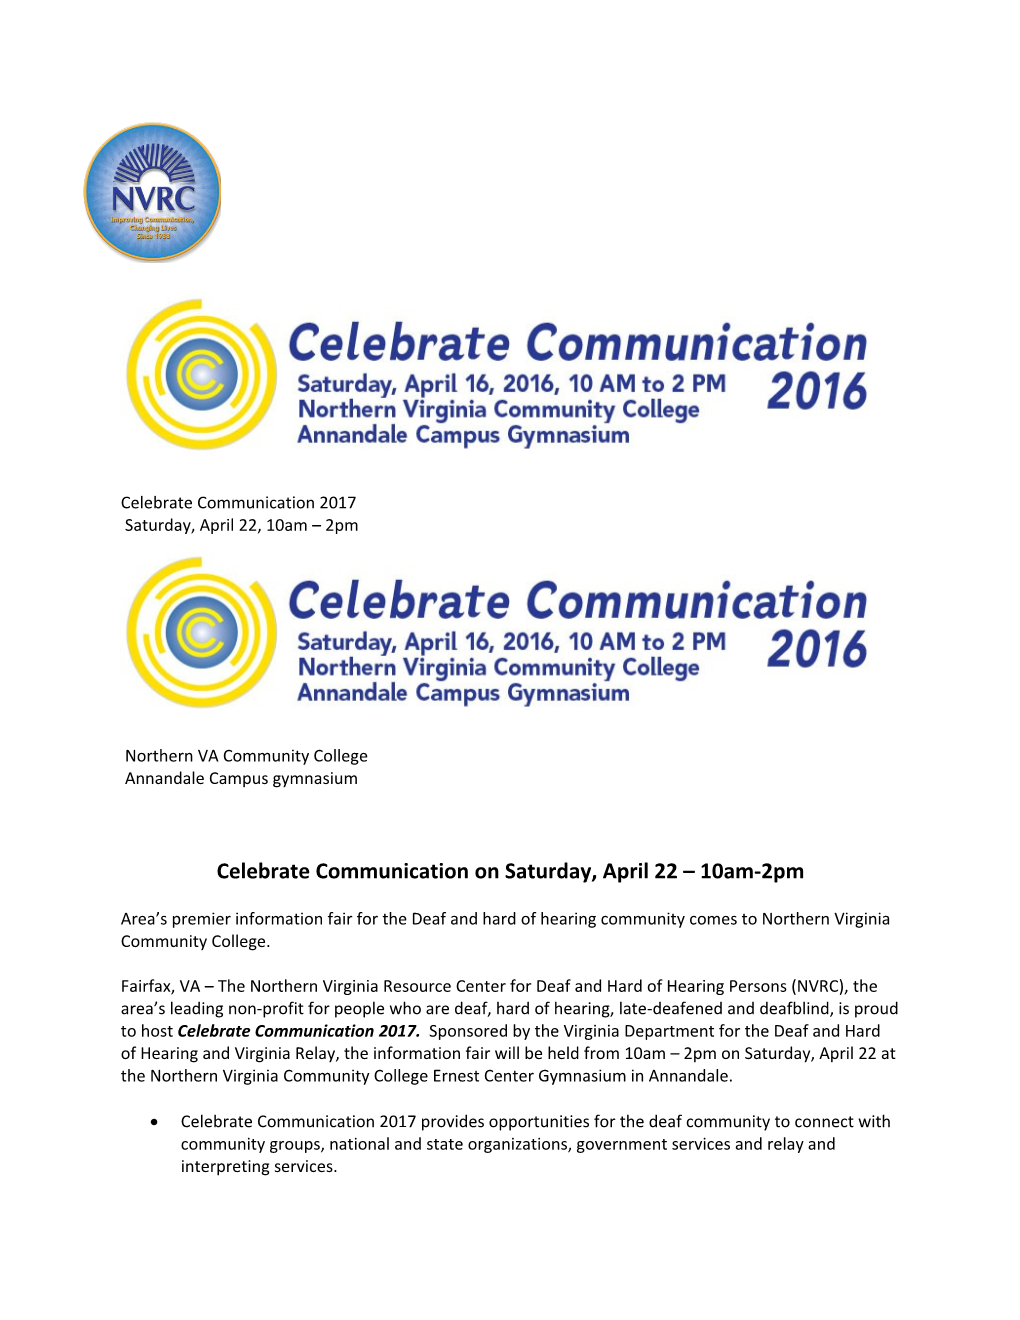 Celebrate Communication on Saturday, April 22 10Am-2Pm